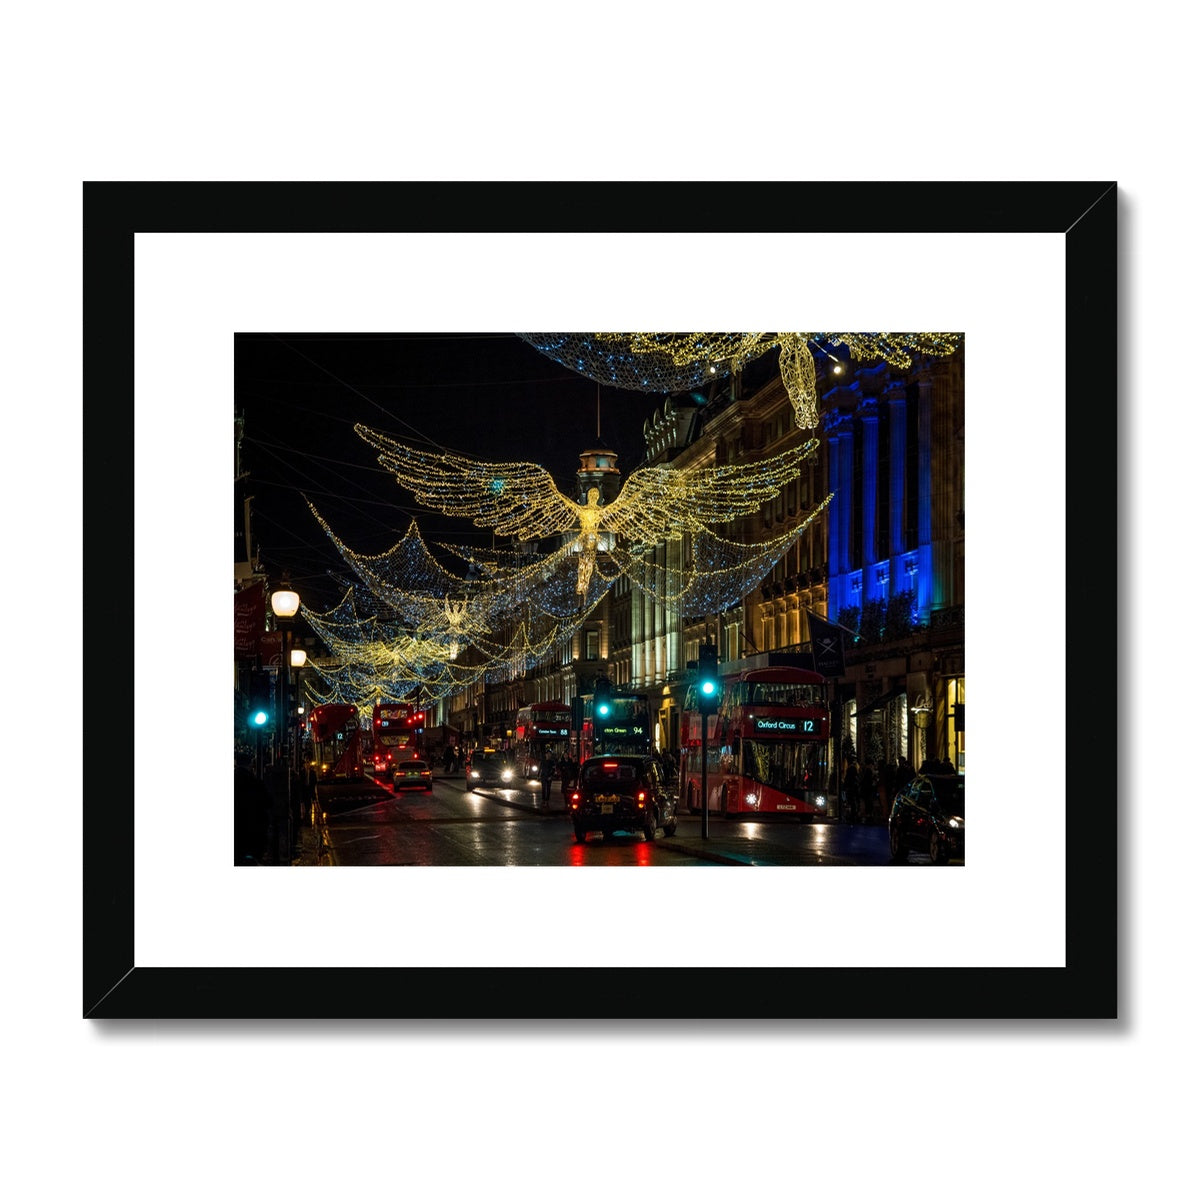 Regent Street Christmas lights, London. UK. Framed & Mounted Print